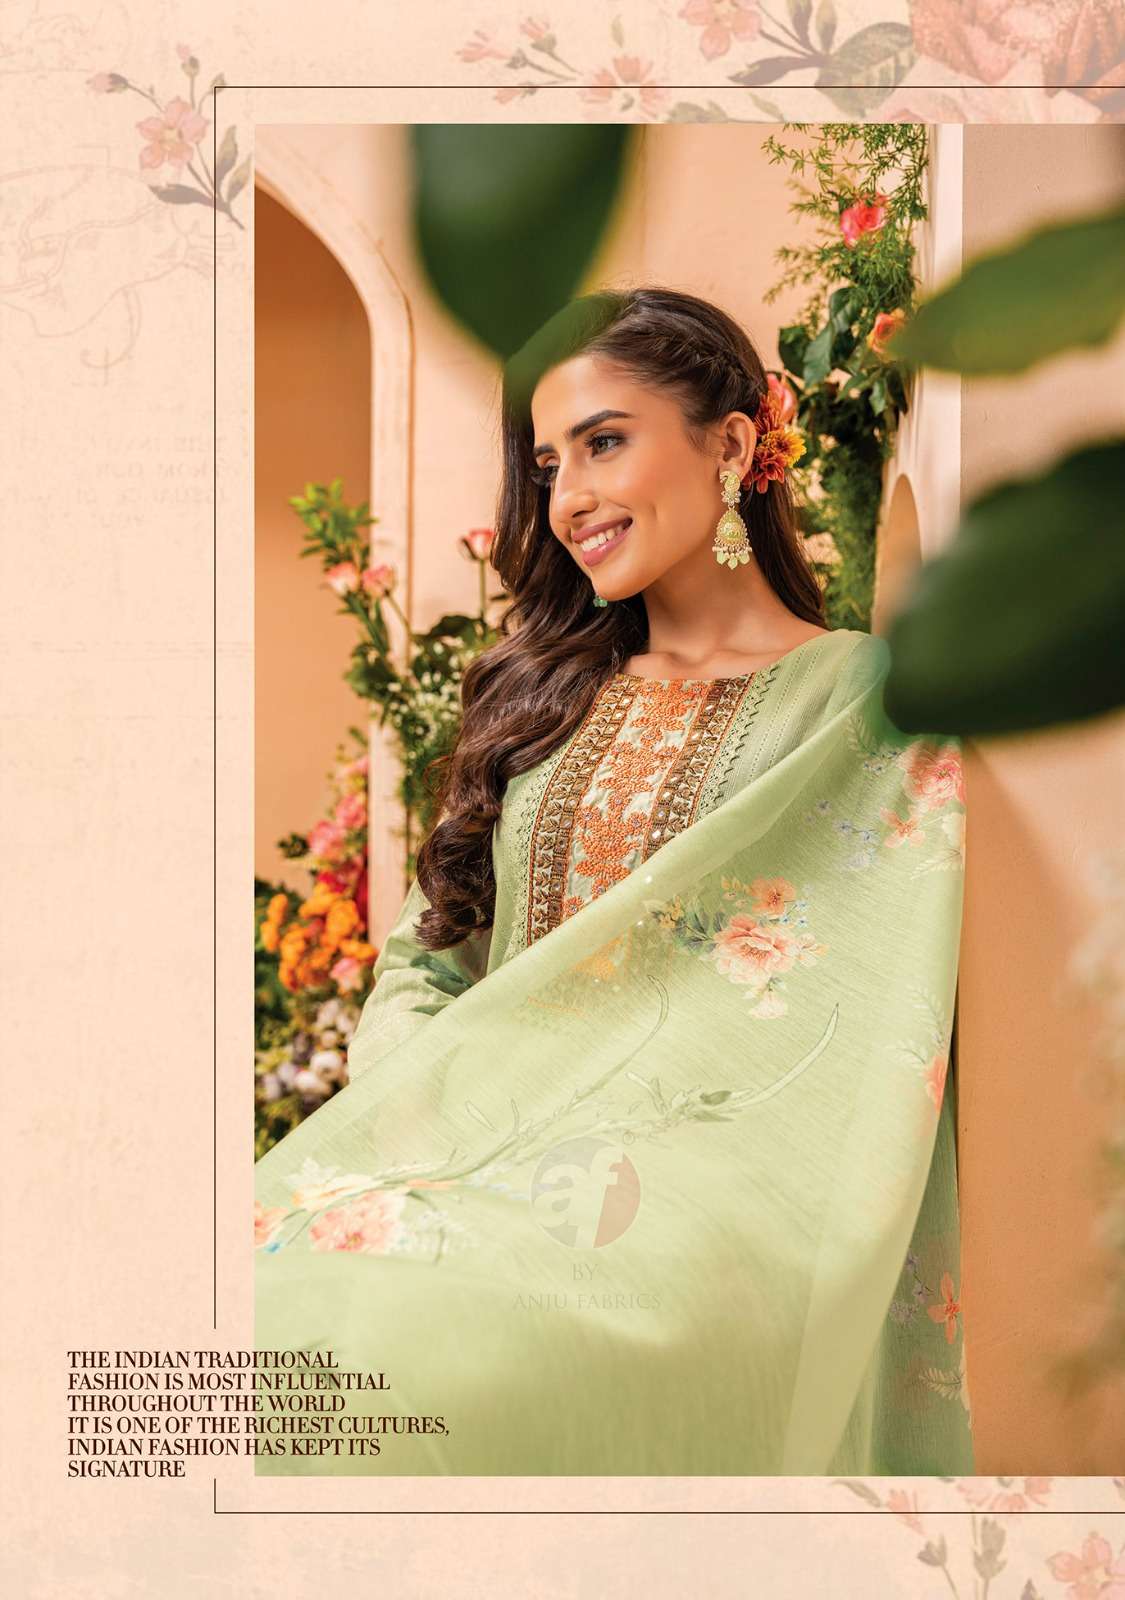 anju fabrics preety petals 3111-3116 series designer latest wedding kurtis wholesaler surat